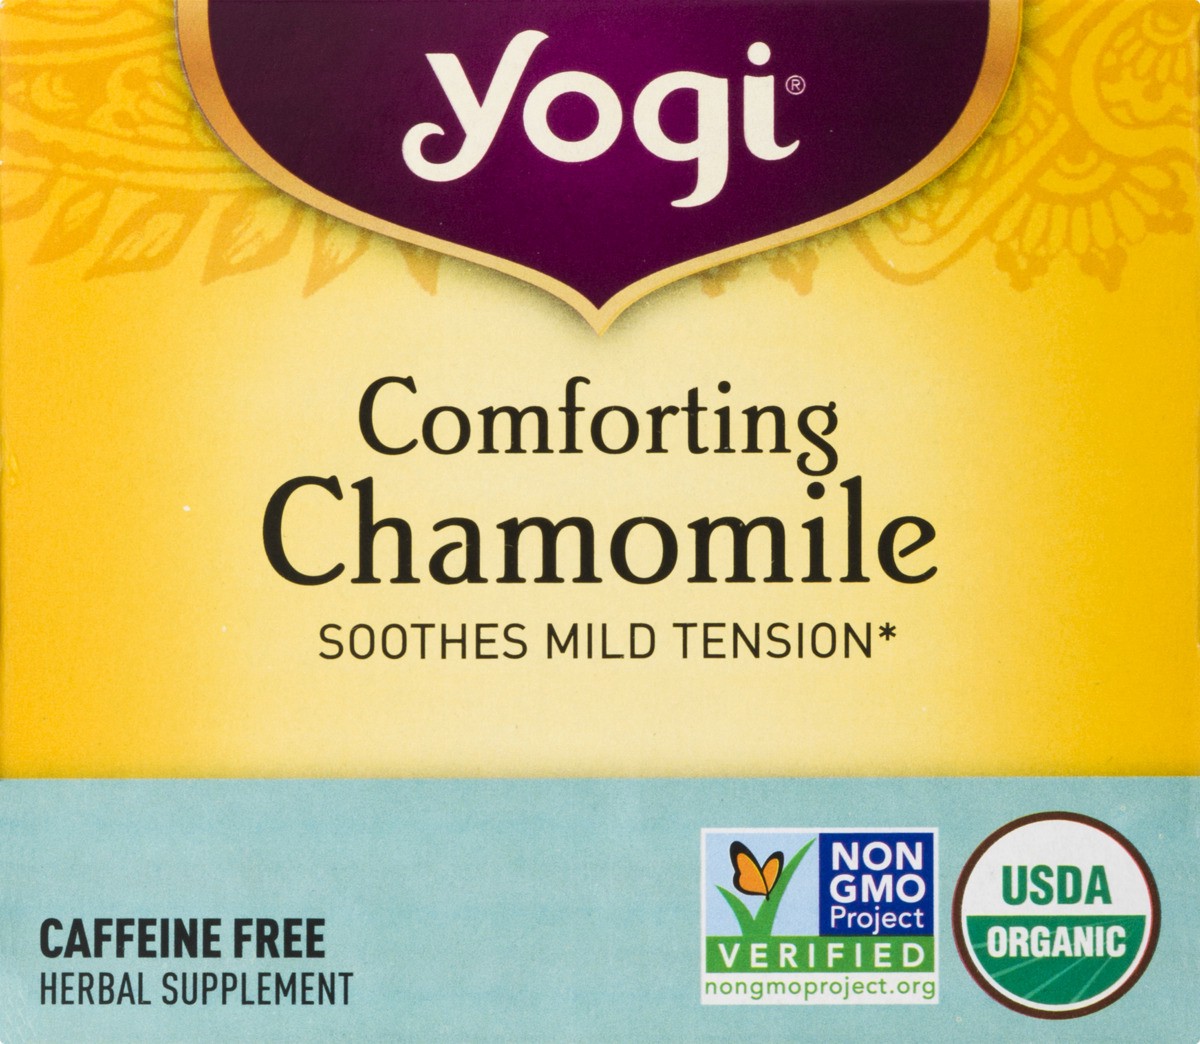 slide 9 of 9, Yogi Teas Organic Caffeine Free Comforting Chamomile Herbal Tea, 16 ct